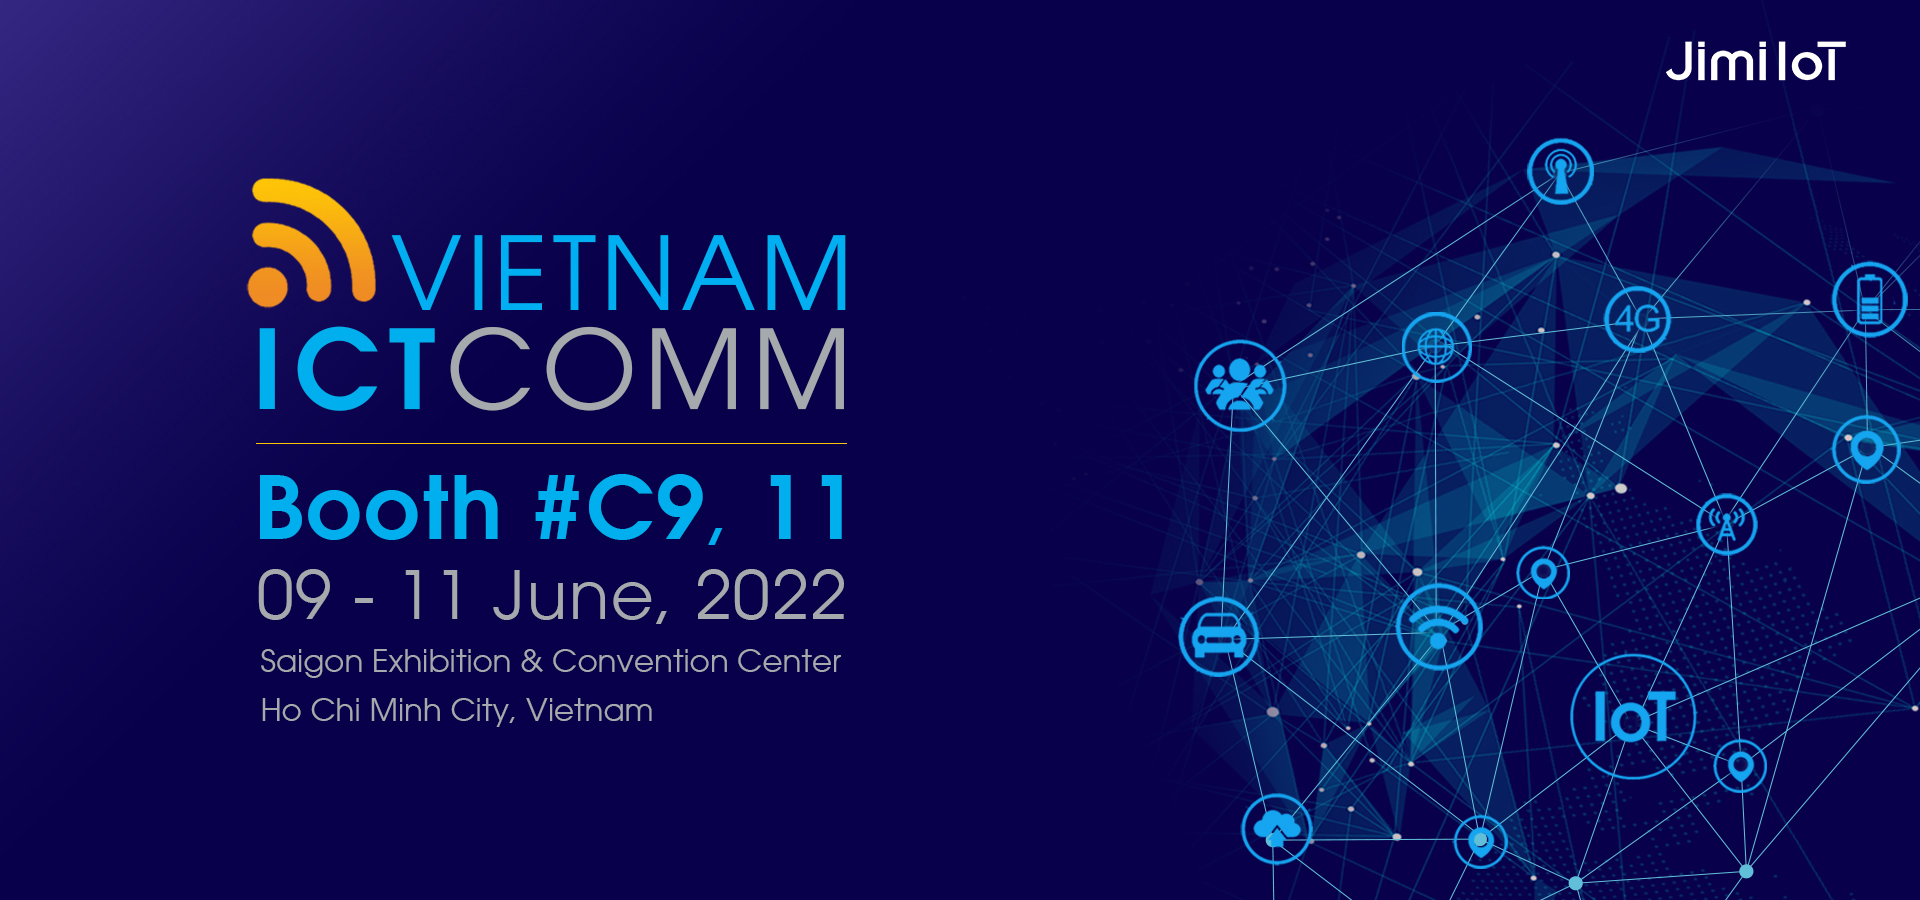 The VIETNAM ICT COMM 2022